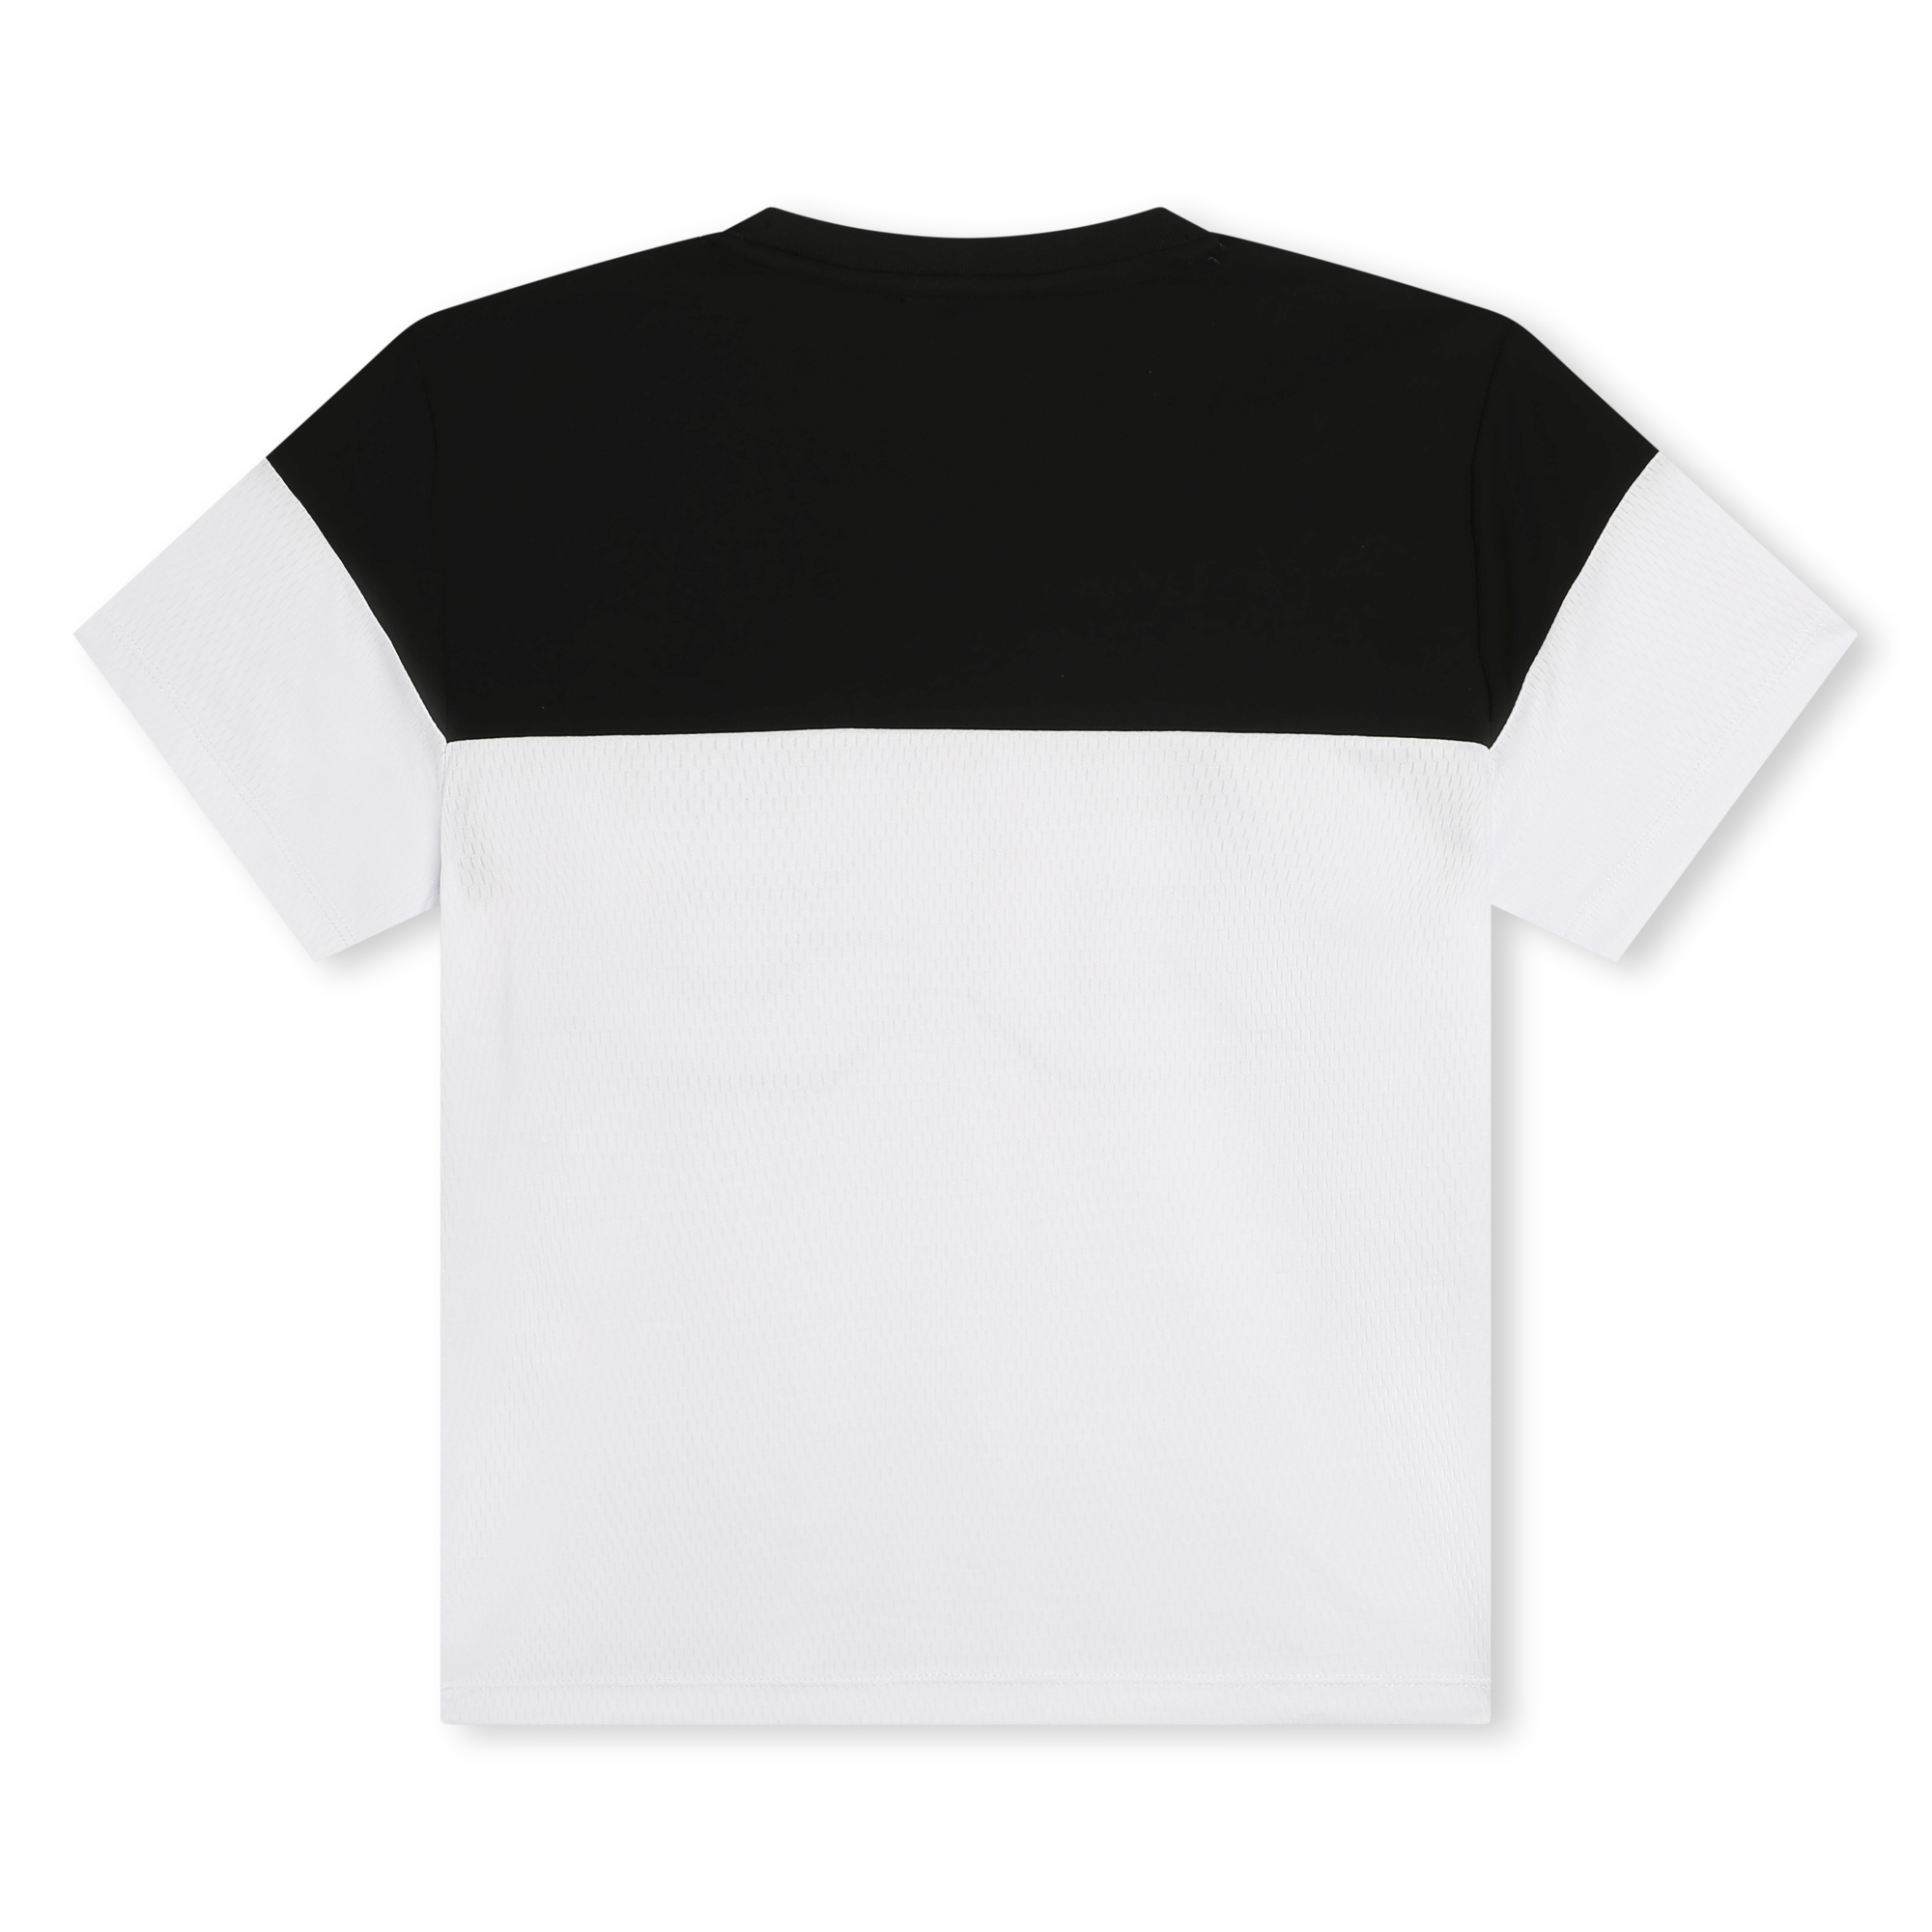 Two-toned unisex T-shirt DKNY for UNISEX